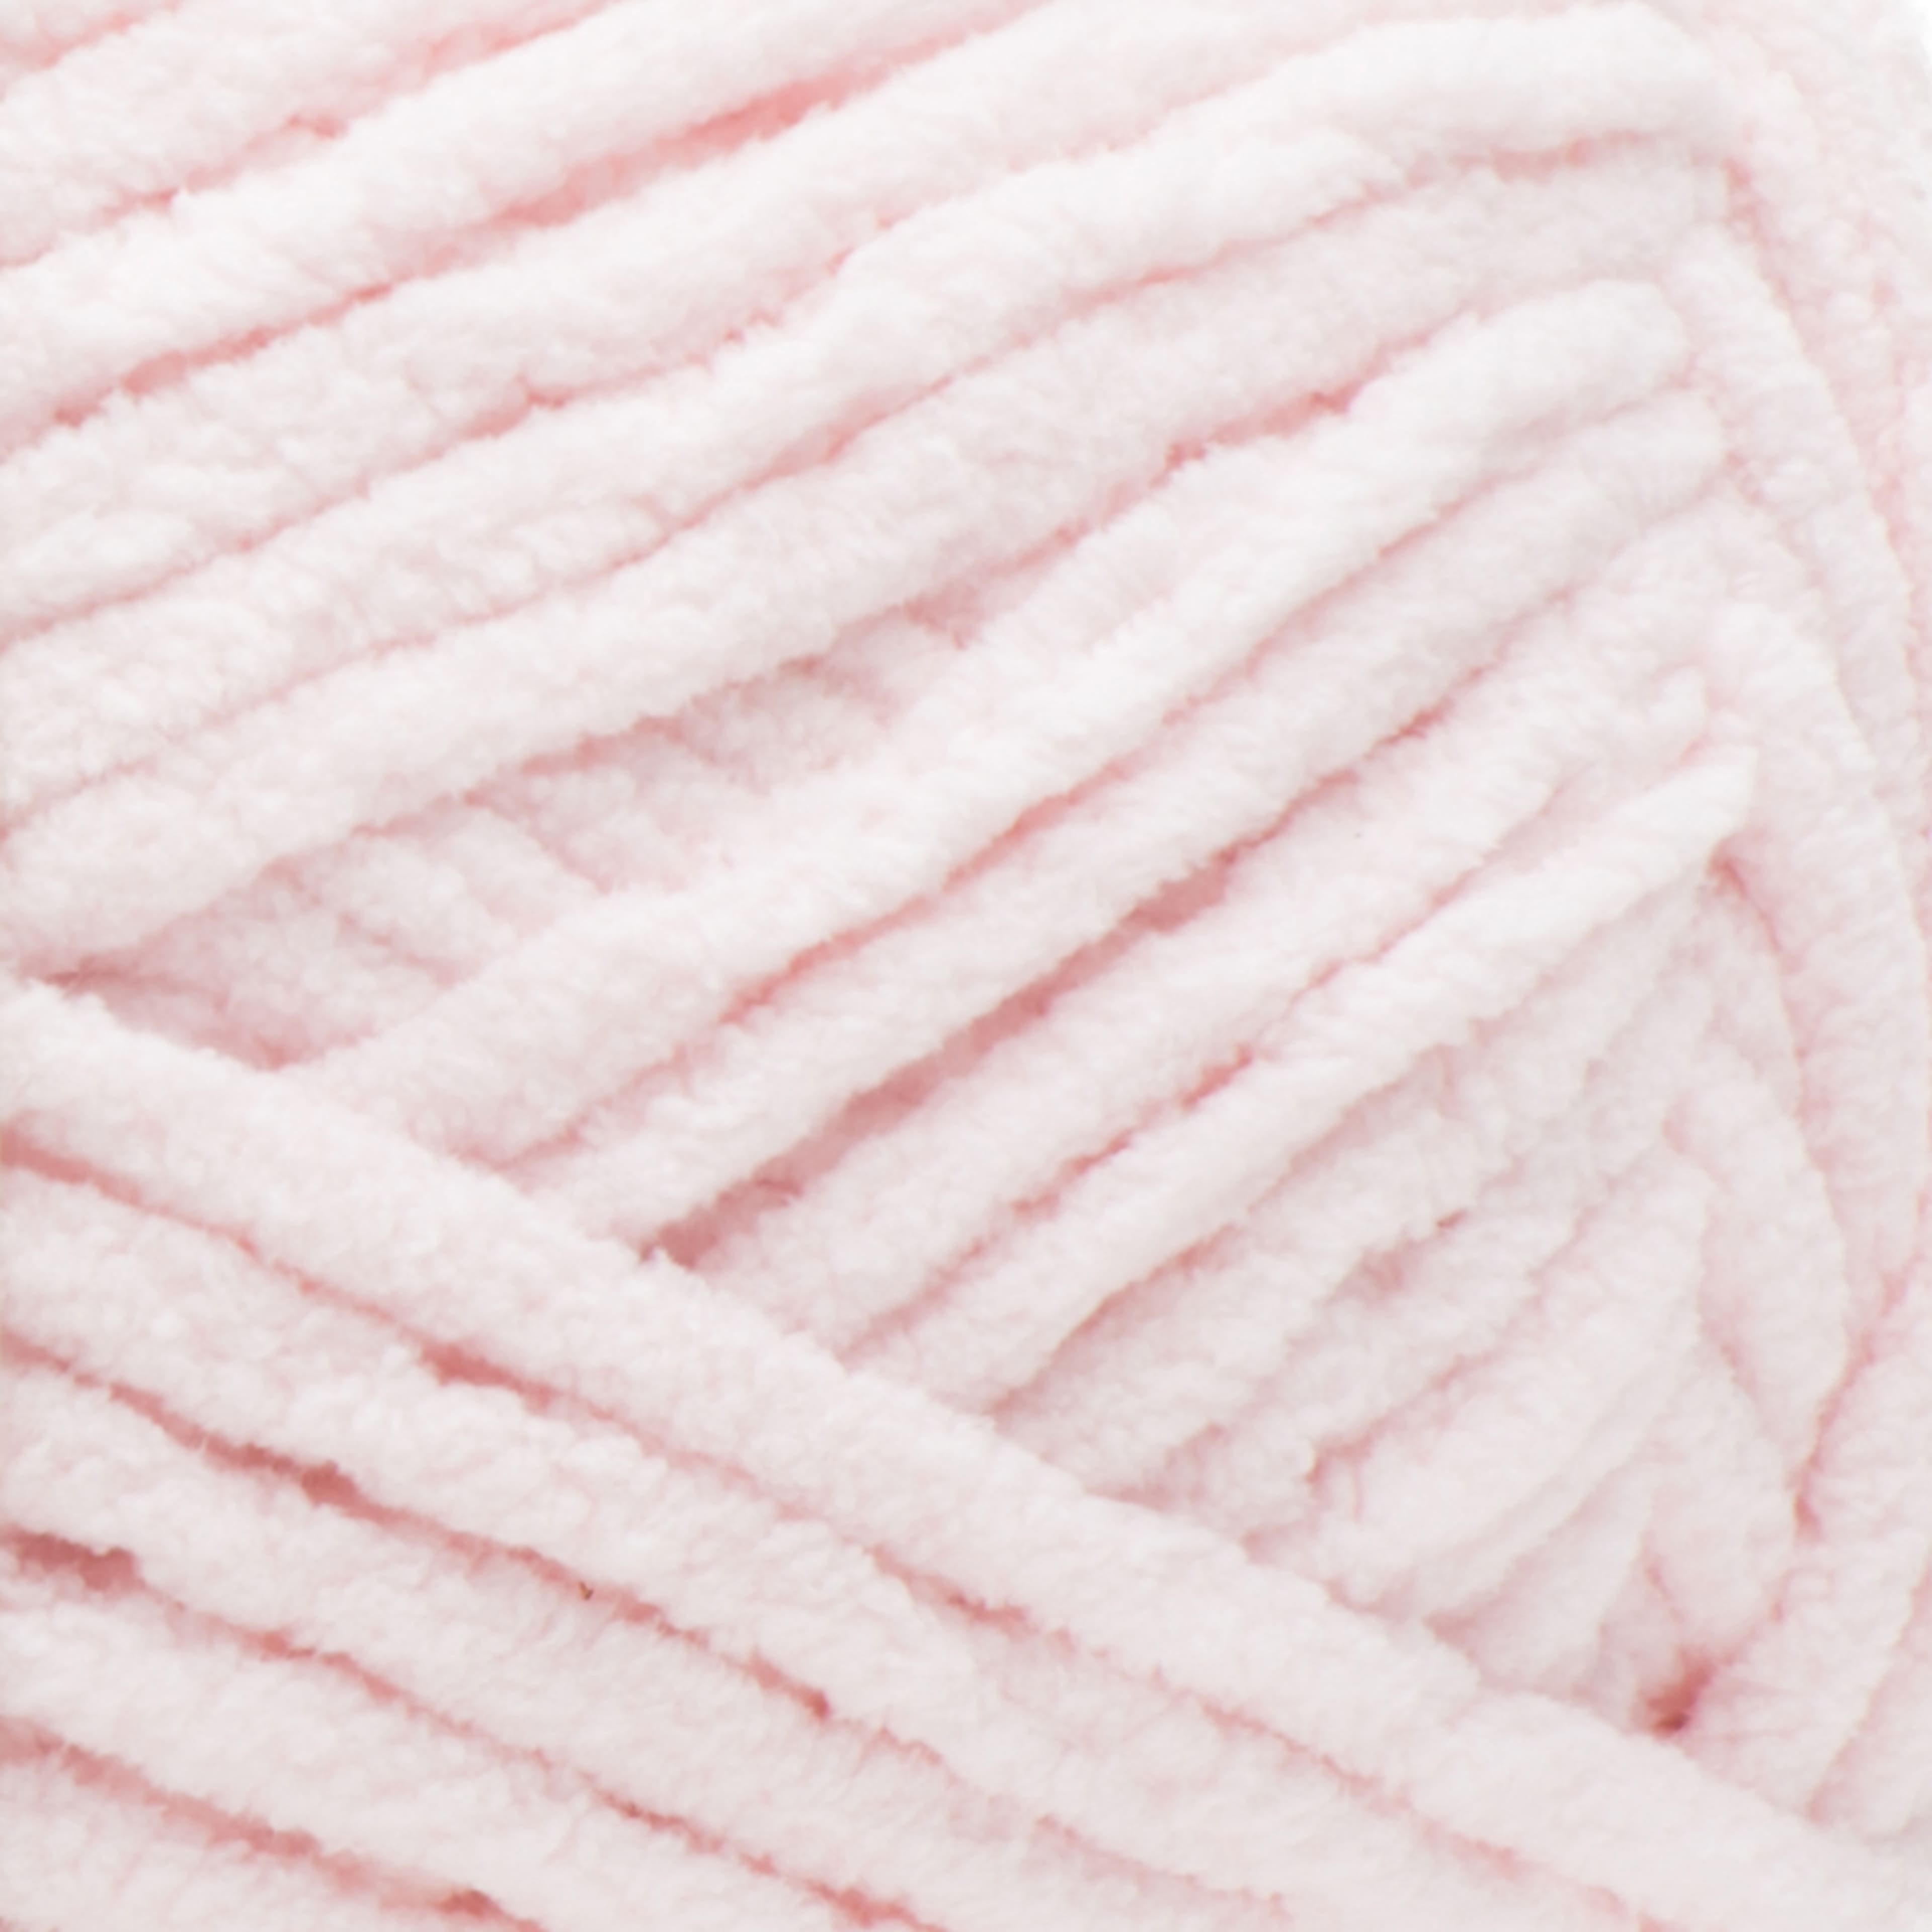 Bernat Baby Blanket Dappled - Misty Jungle Green (15006) - 300g - Wool  Warehouse - Buy Yarn, Wool, Needles & Other Knitting Supplies Online!